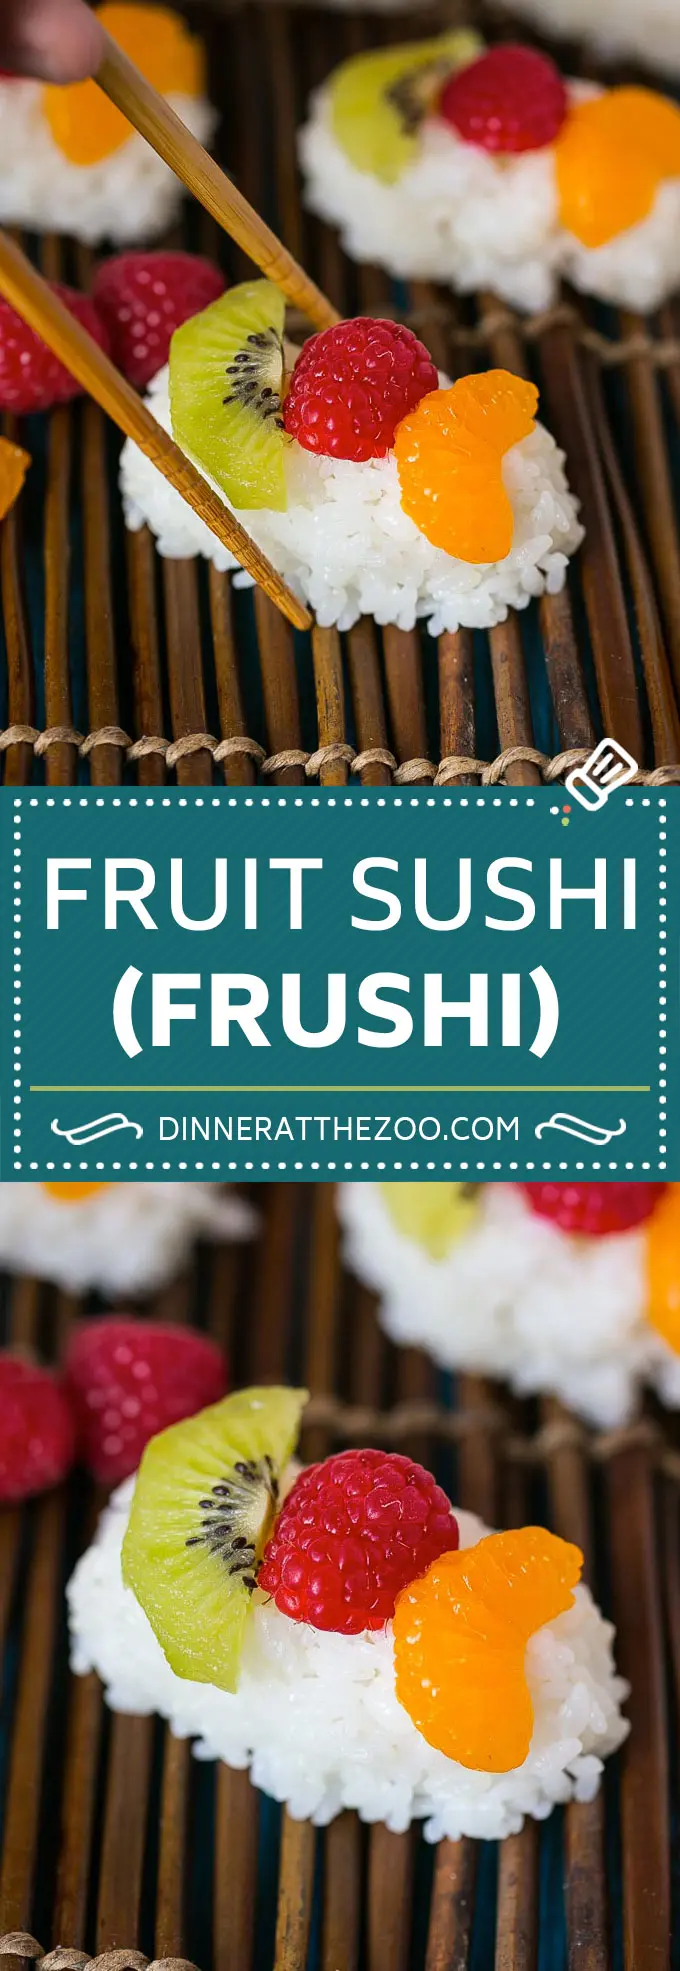 Recette de sushi aux fruits | Dessert Sushi #fruit #sushi #snack #dessert #dinneratthezoo